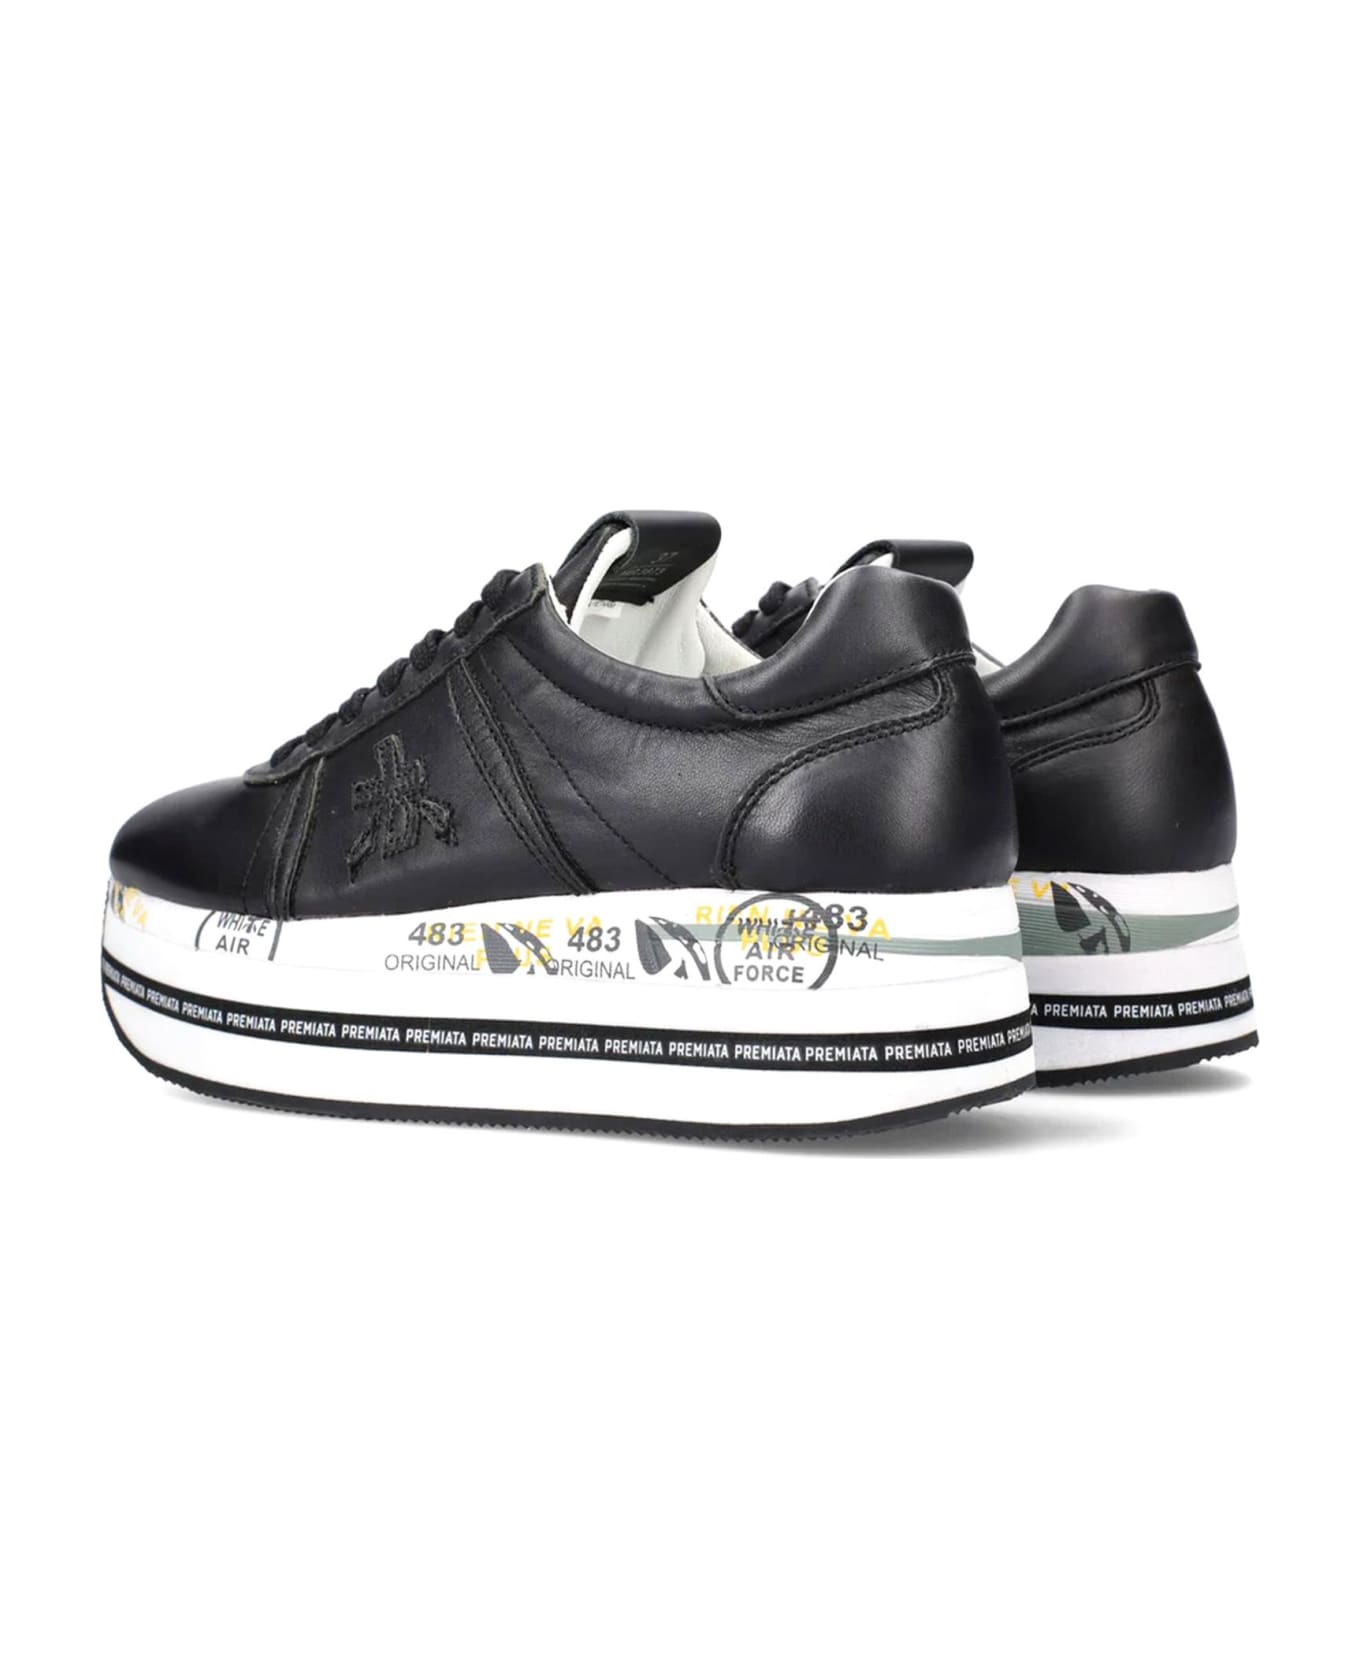 Premiata Black Leather Beth Sneakers - Black